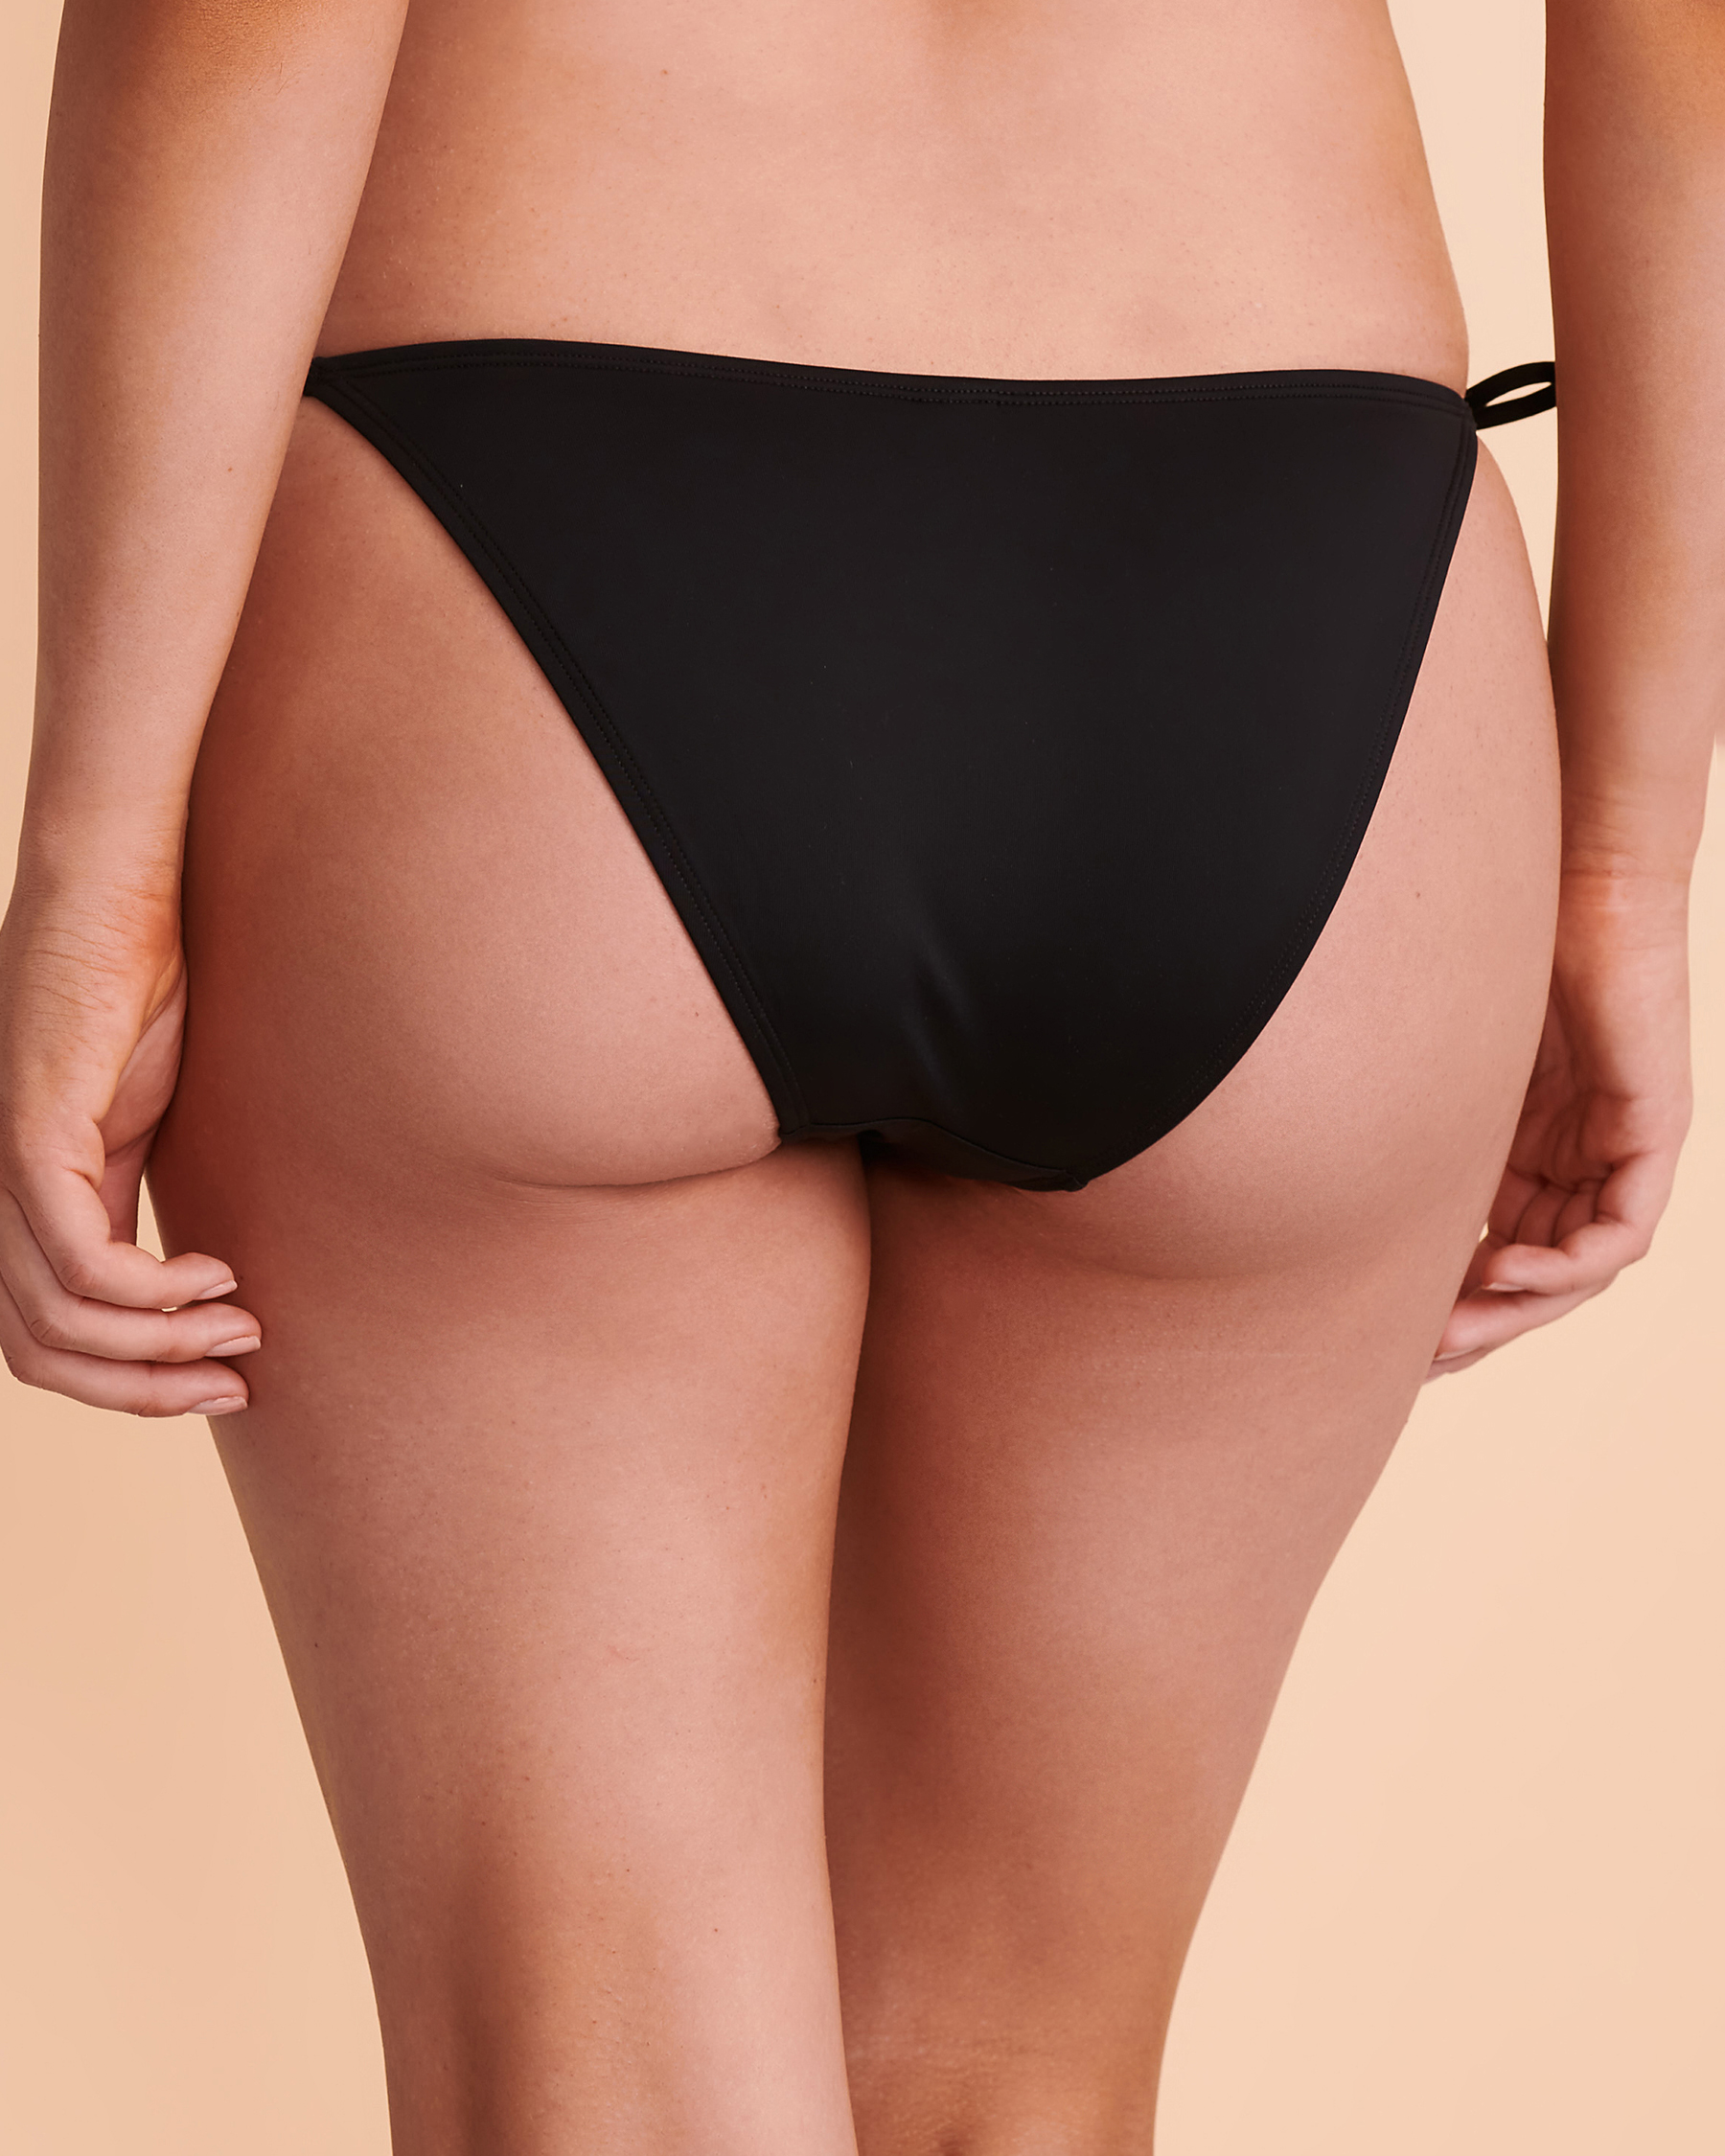 SANTEMARE BLACK FEATHER Brazilian Bikini Bottom Black 01300101 - View2